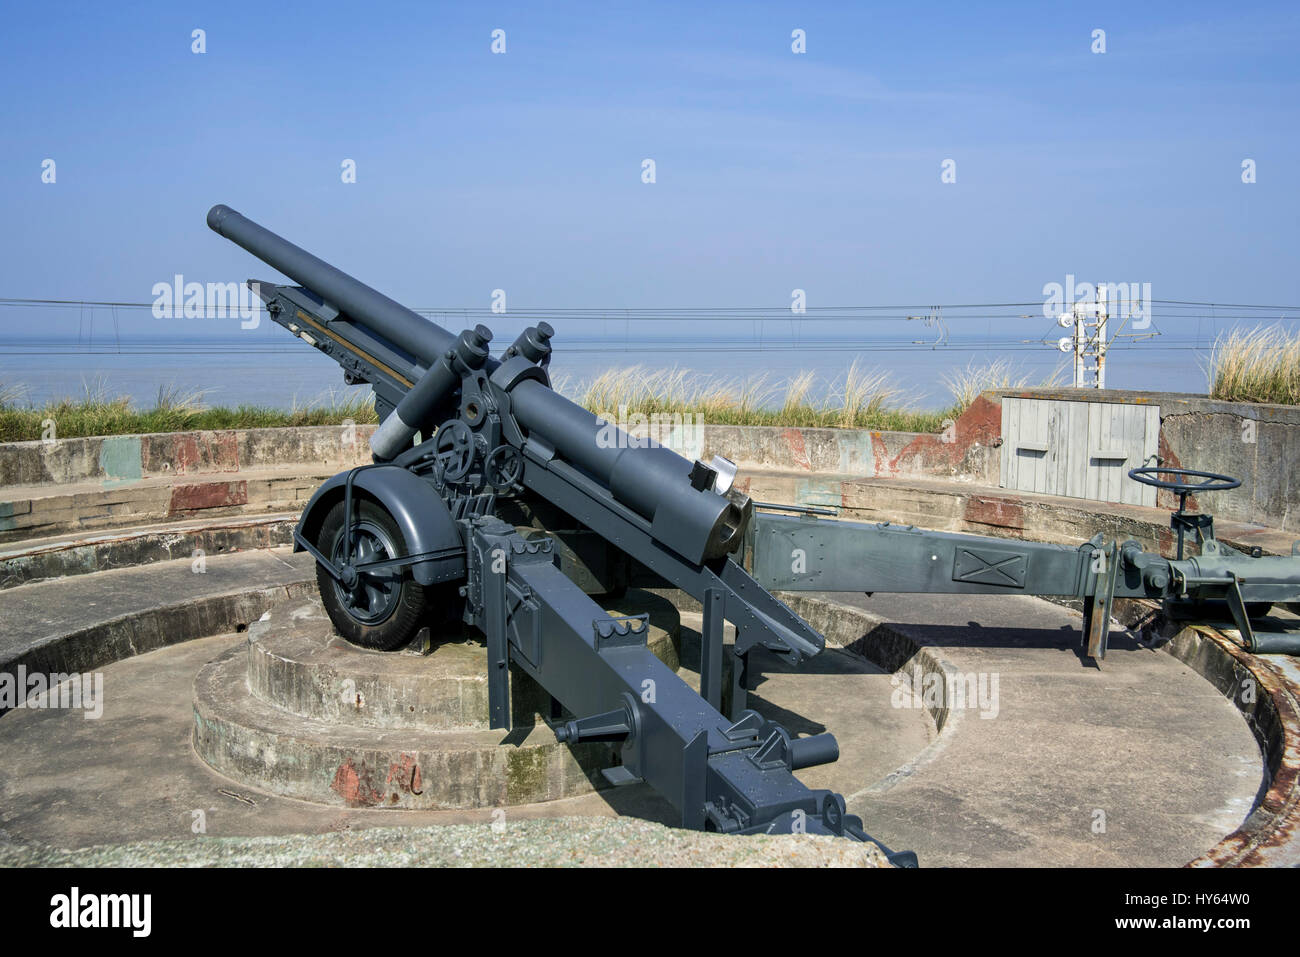 Canon de 12 cm L mle 1931, 120mm Howitzer / Belgian field gun at the Raversyde Atlantikwall / Atlantic Wall open-air museum at Raversijde, Belgium Stock Photo